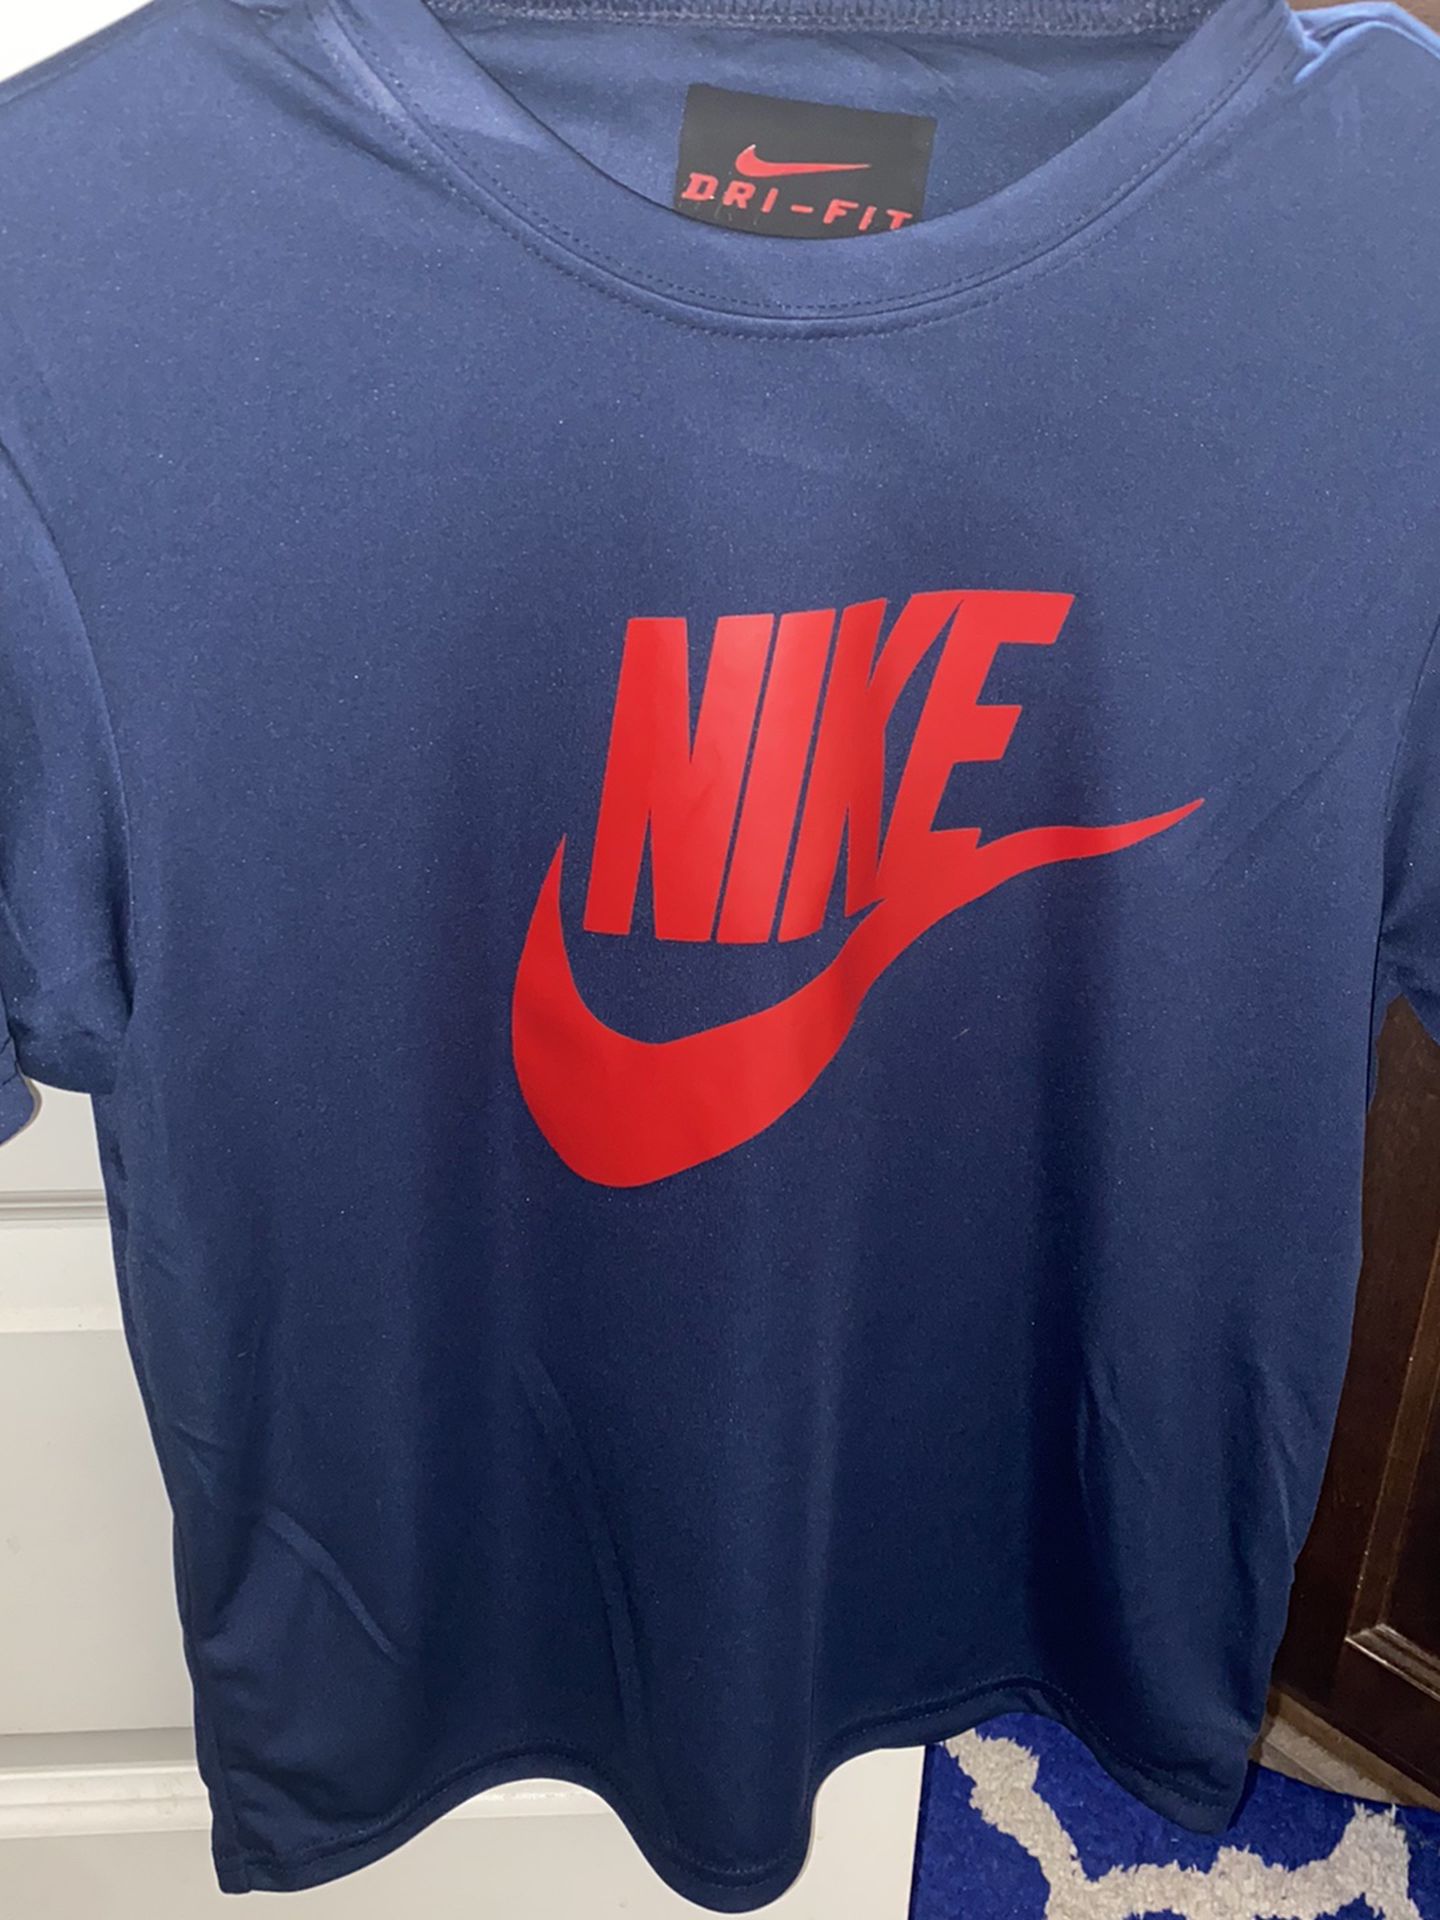 Nike Dri Fit Shirt